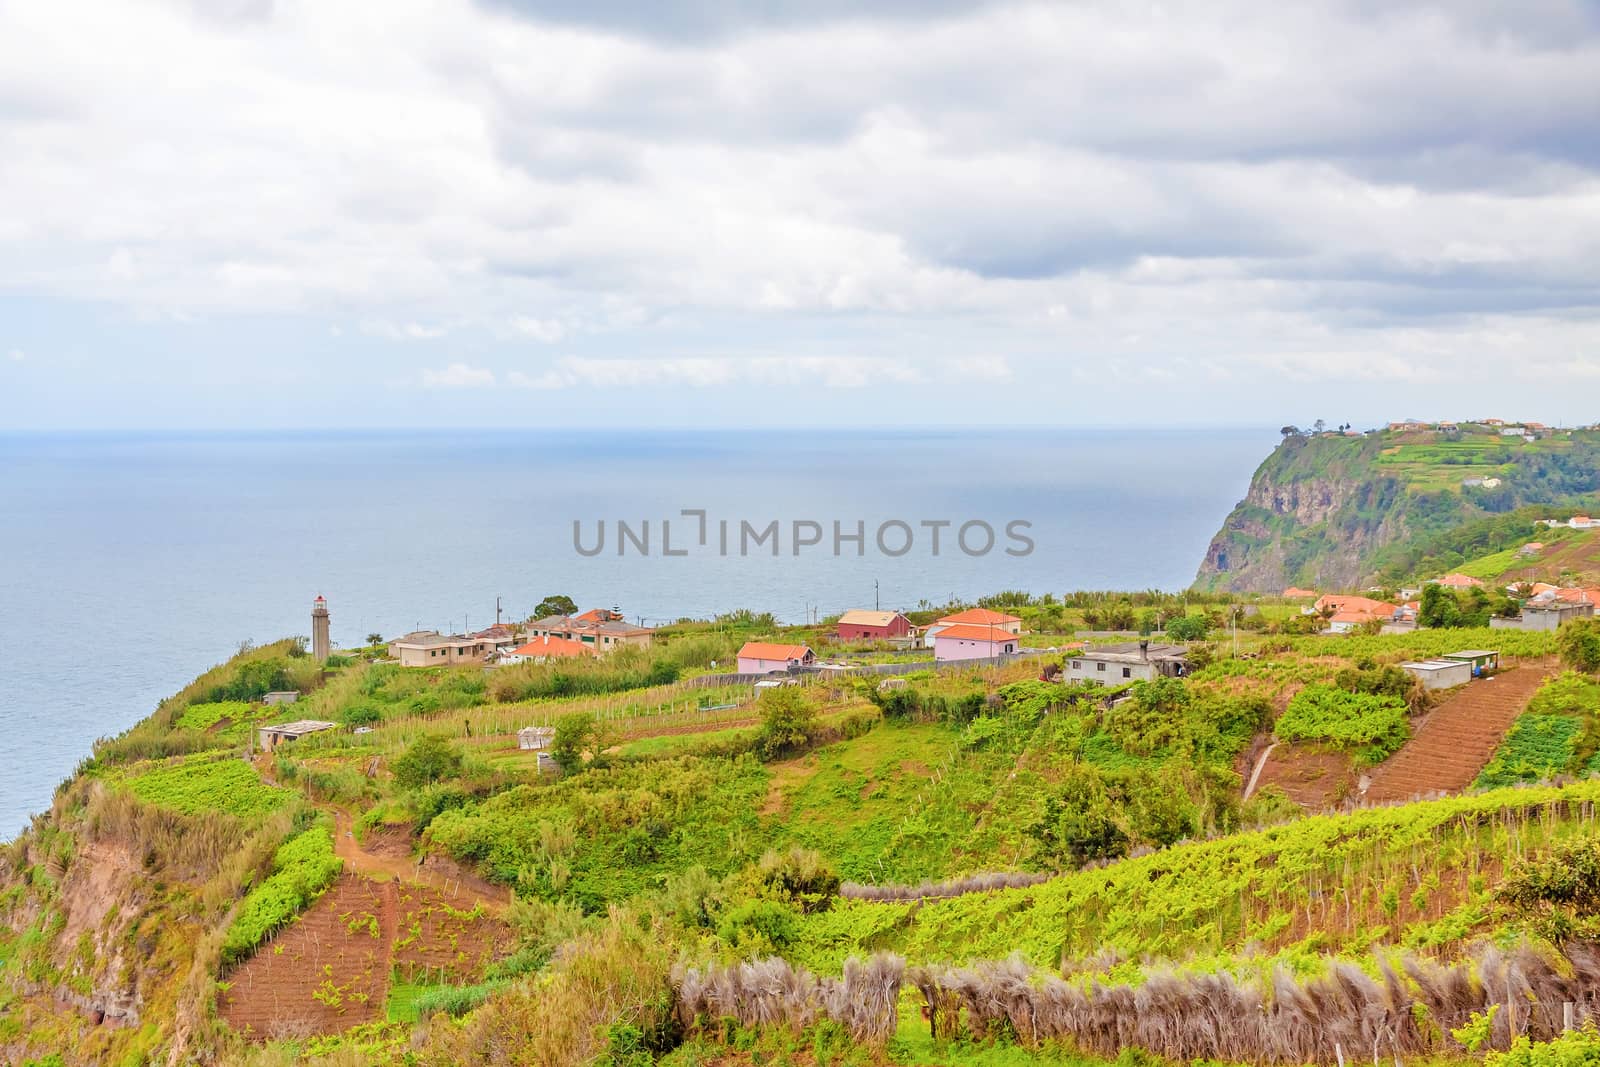 Lighthouse Ponta de Sao Jorge - a famous tourist sight at the north coast of Madeira.